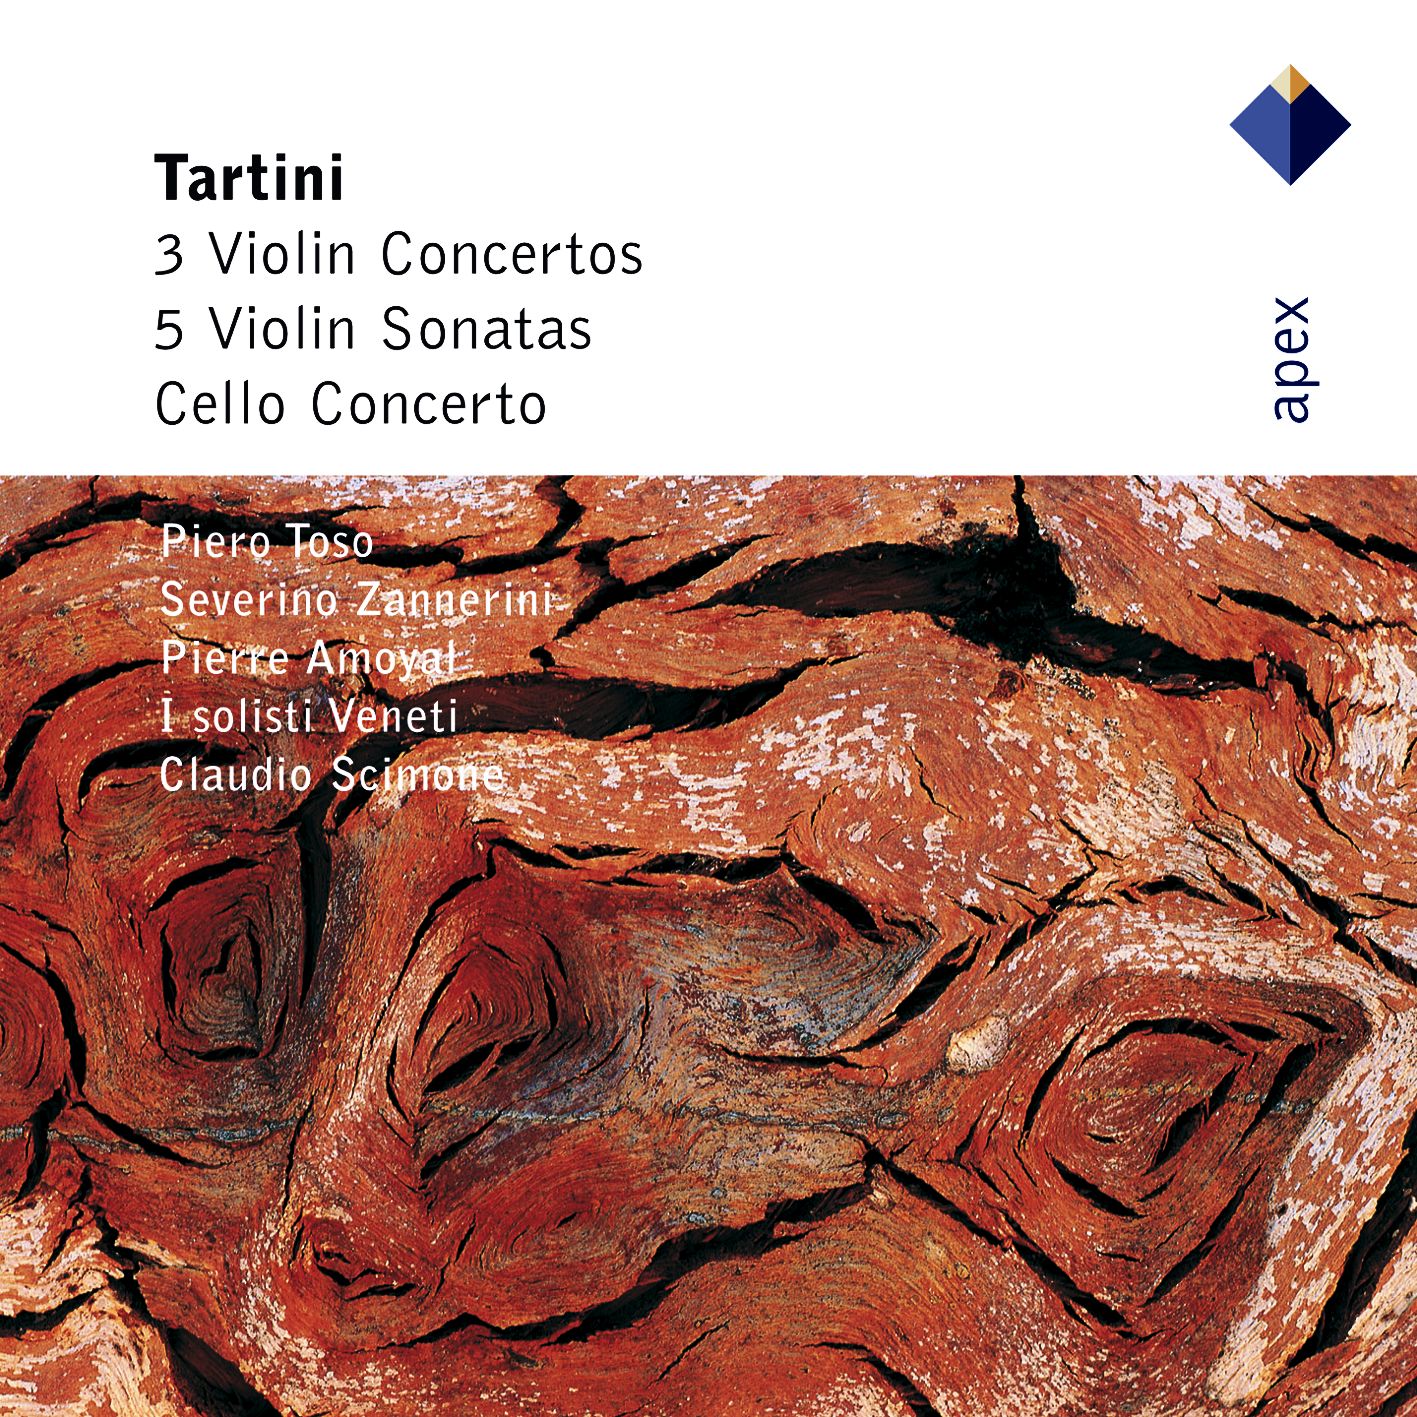 Tartini : Violin Concerto in D minor D45 : I Allegro